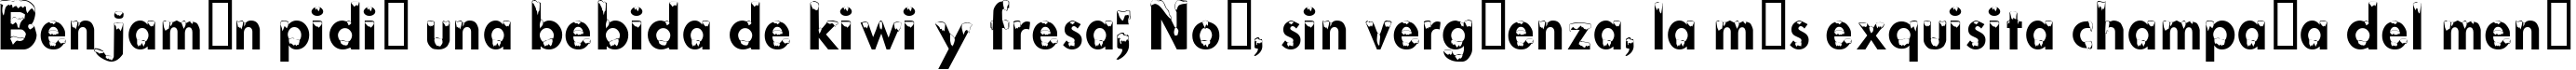 Пример написания шрифтом AlaskanNights текста на испанском